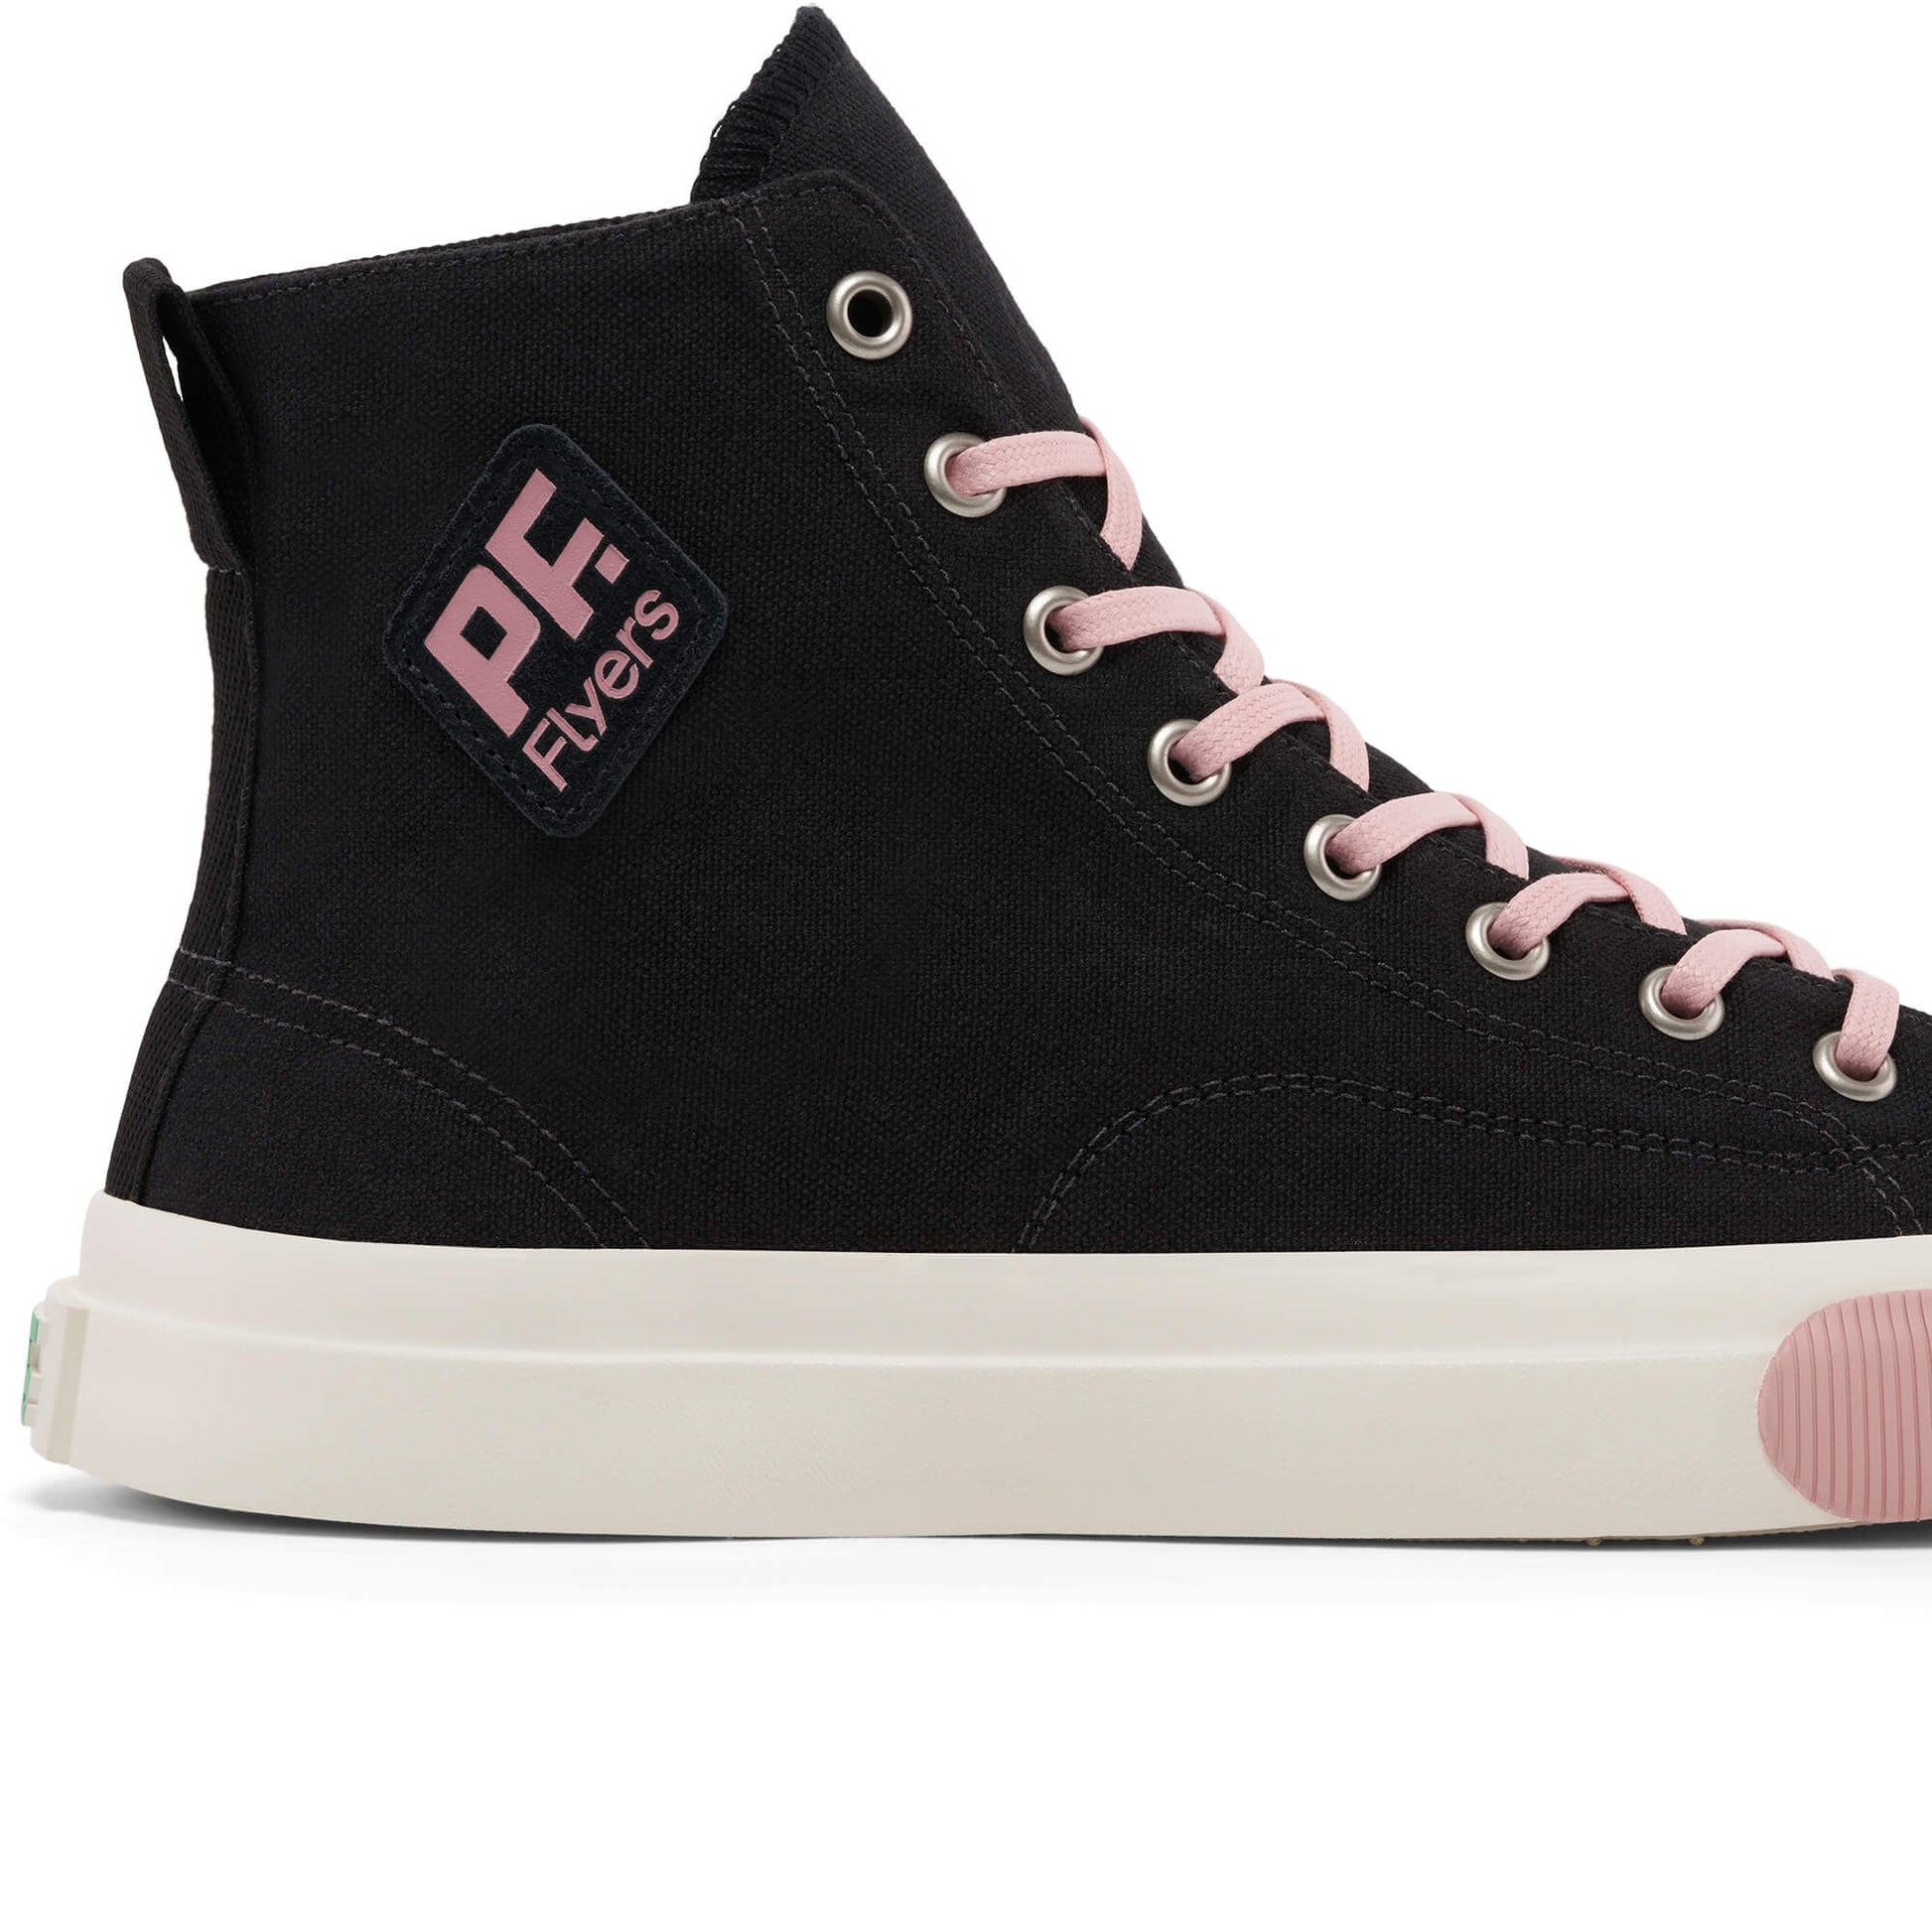 Jet-Black / Pink All American Hi Top | Unisex Canvas Sneaker – PF. Flyers | Sneaker low